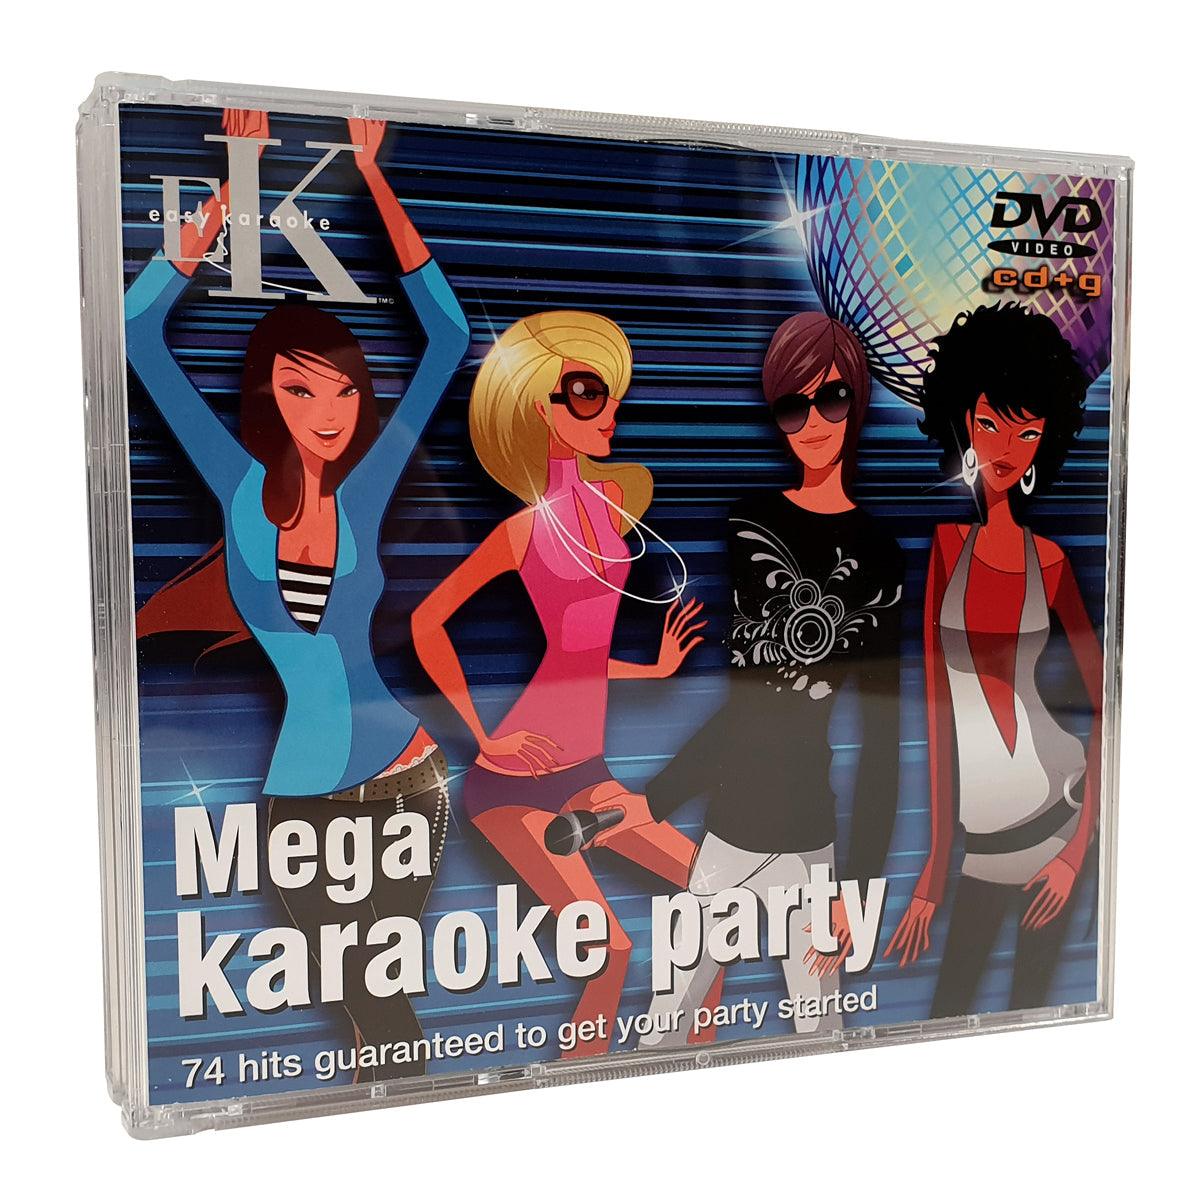 Easy Karaoke Mega Karaoke Party 4 Disc Set + Bonus Disc - DY Pro Audio